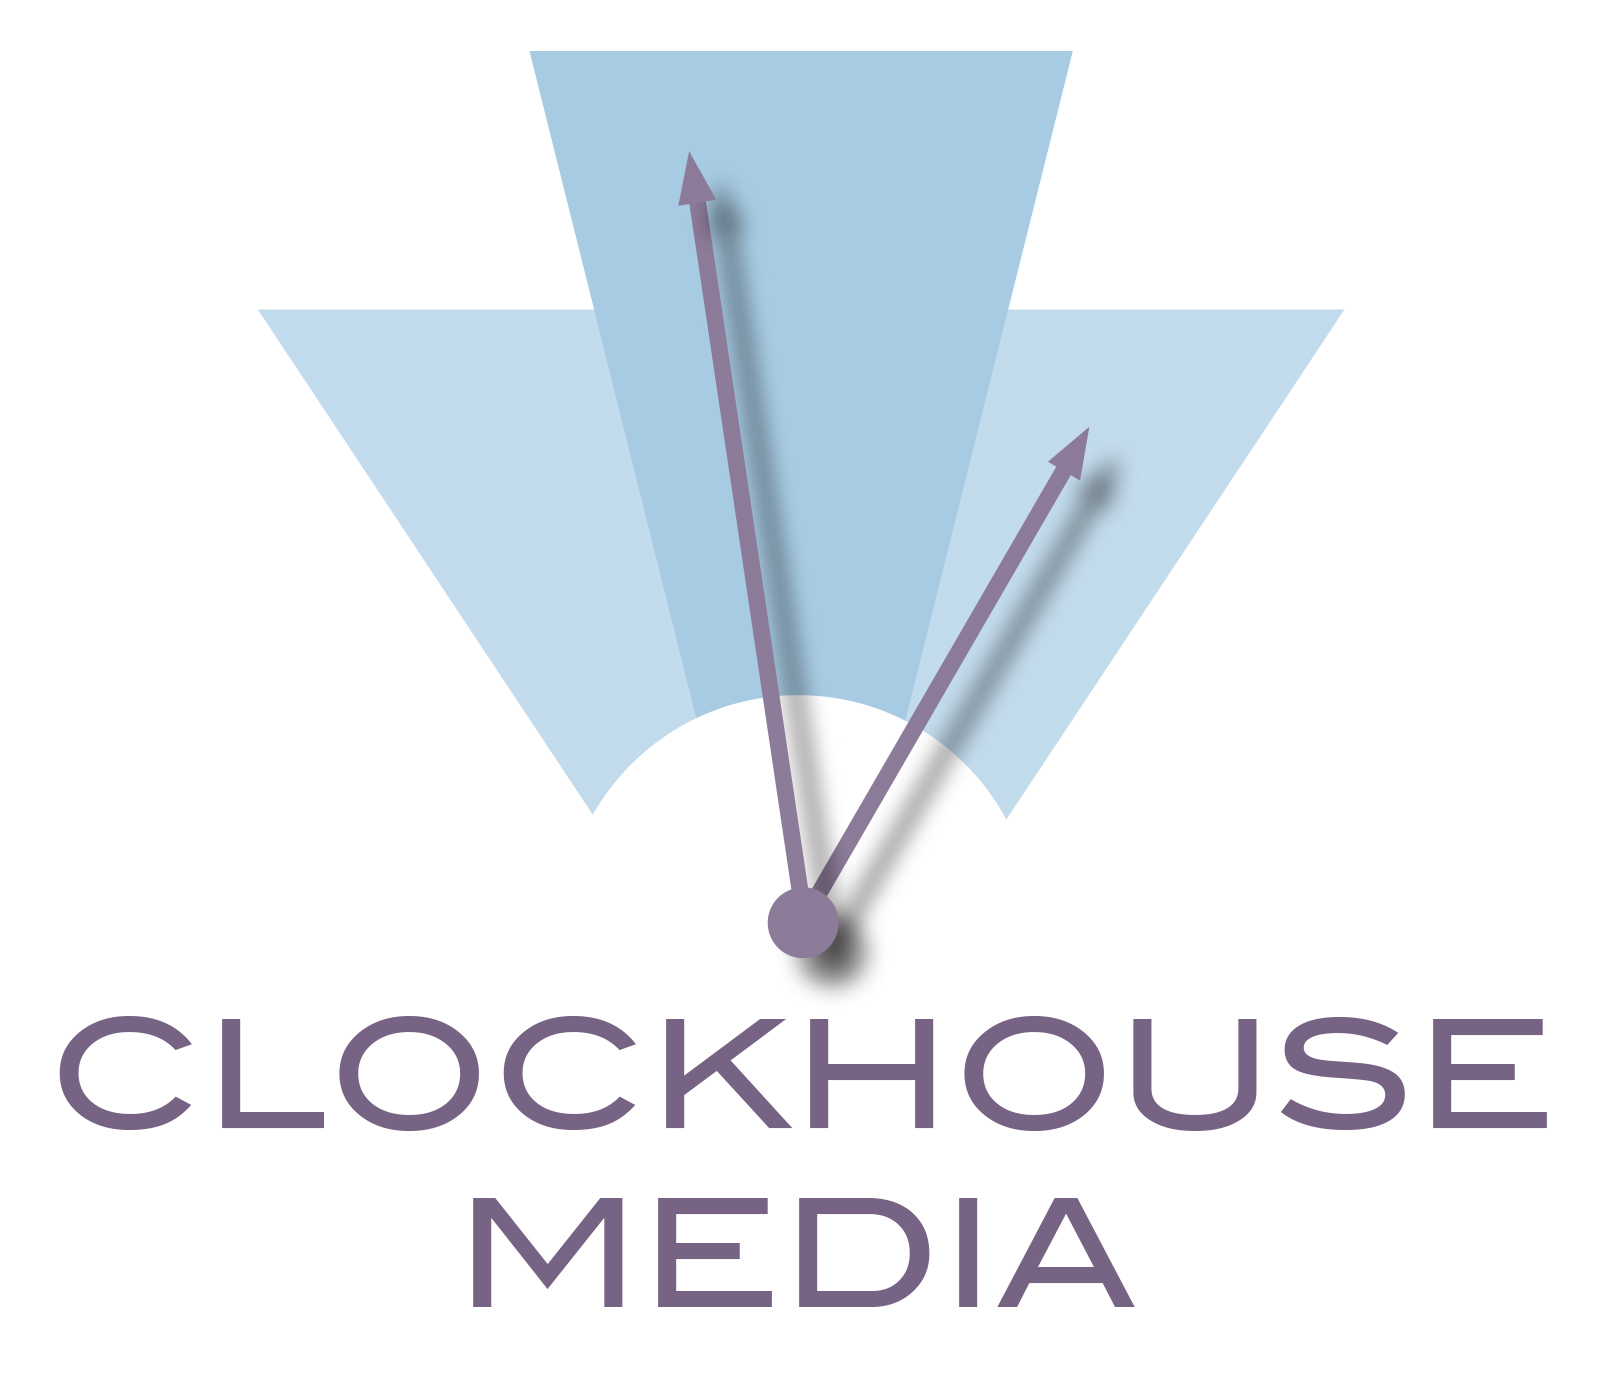 Clockhouse Media